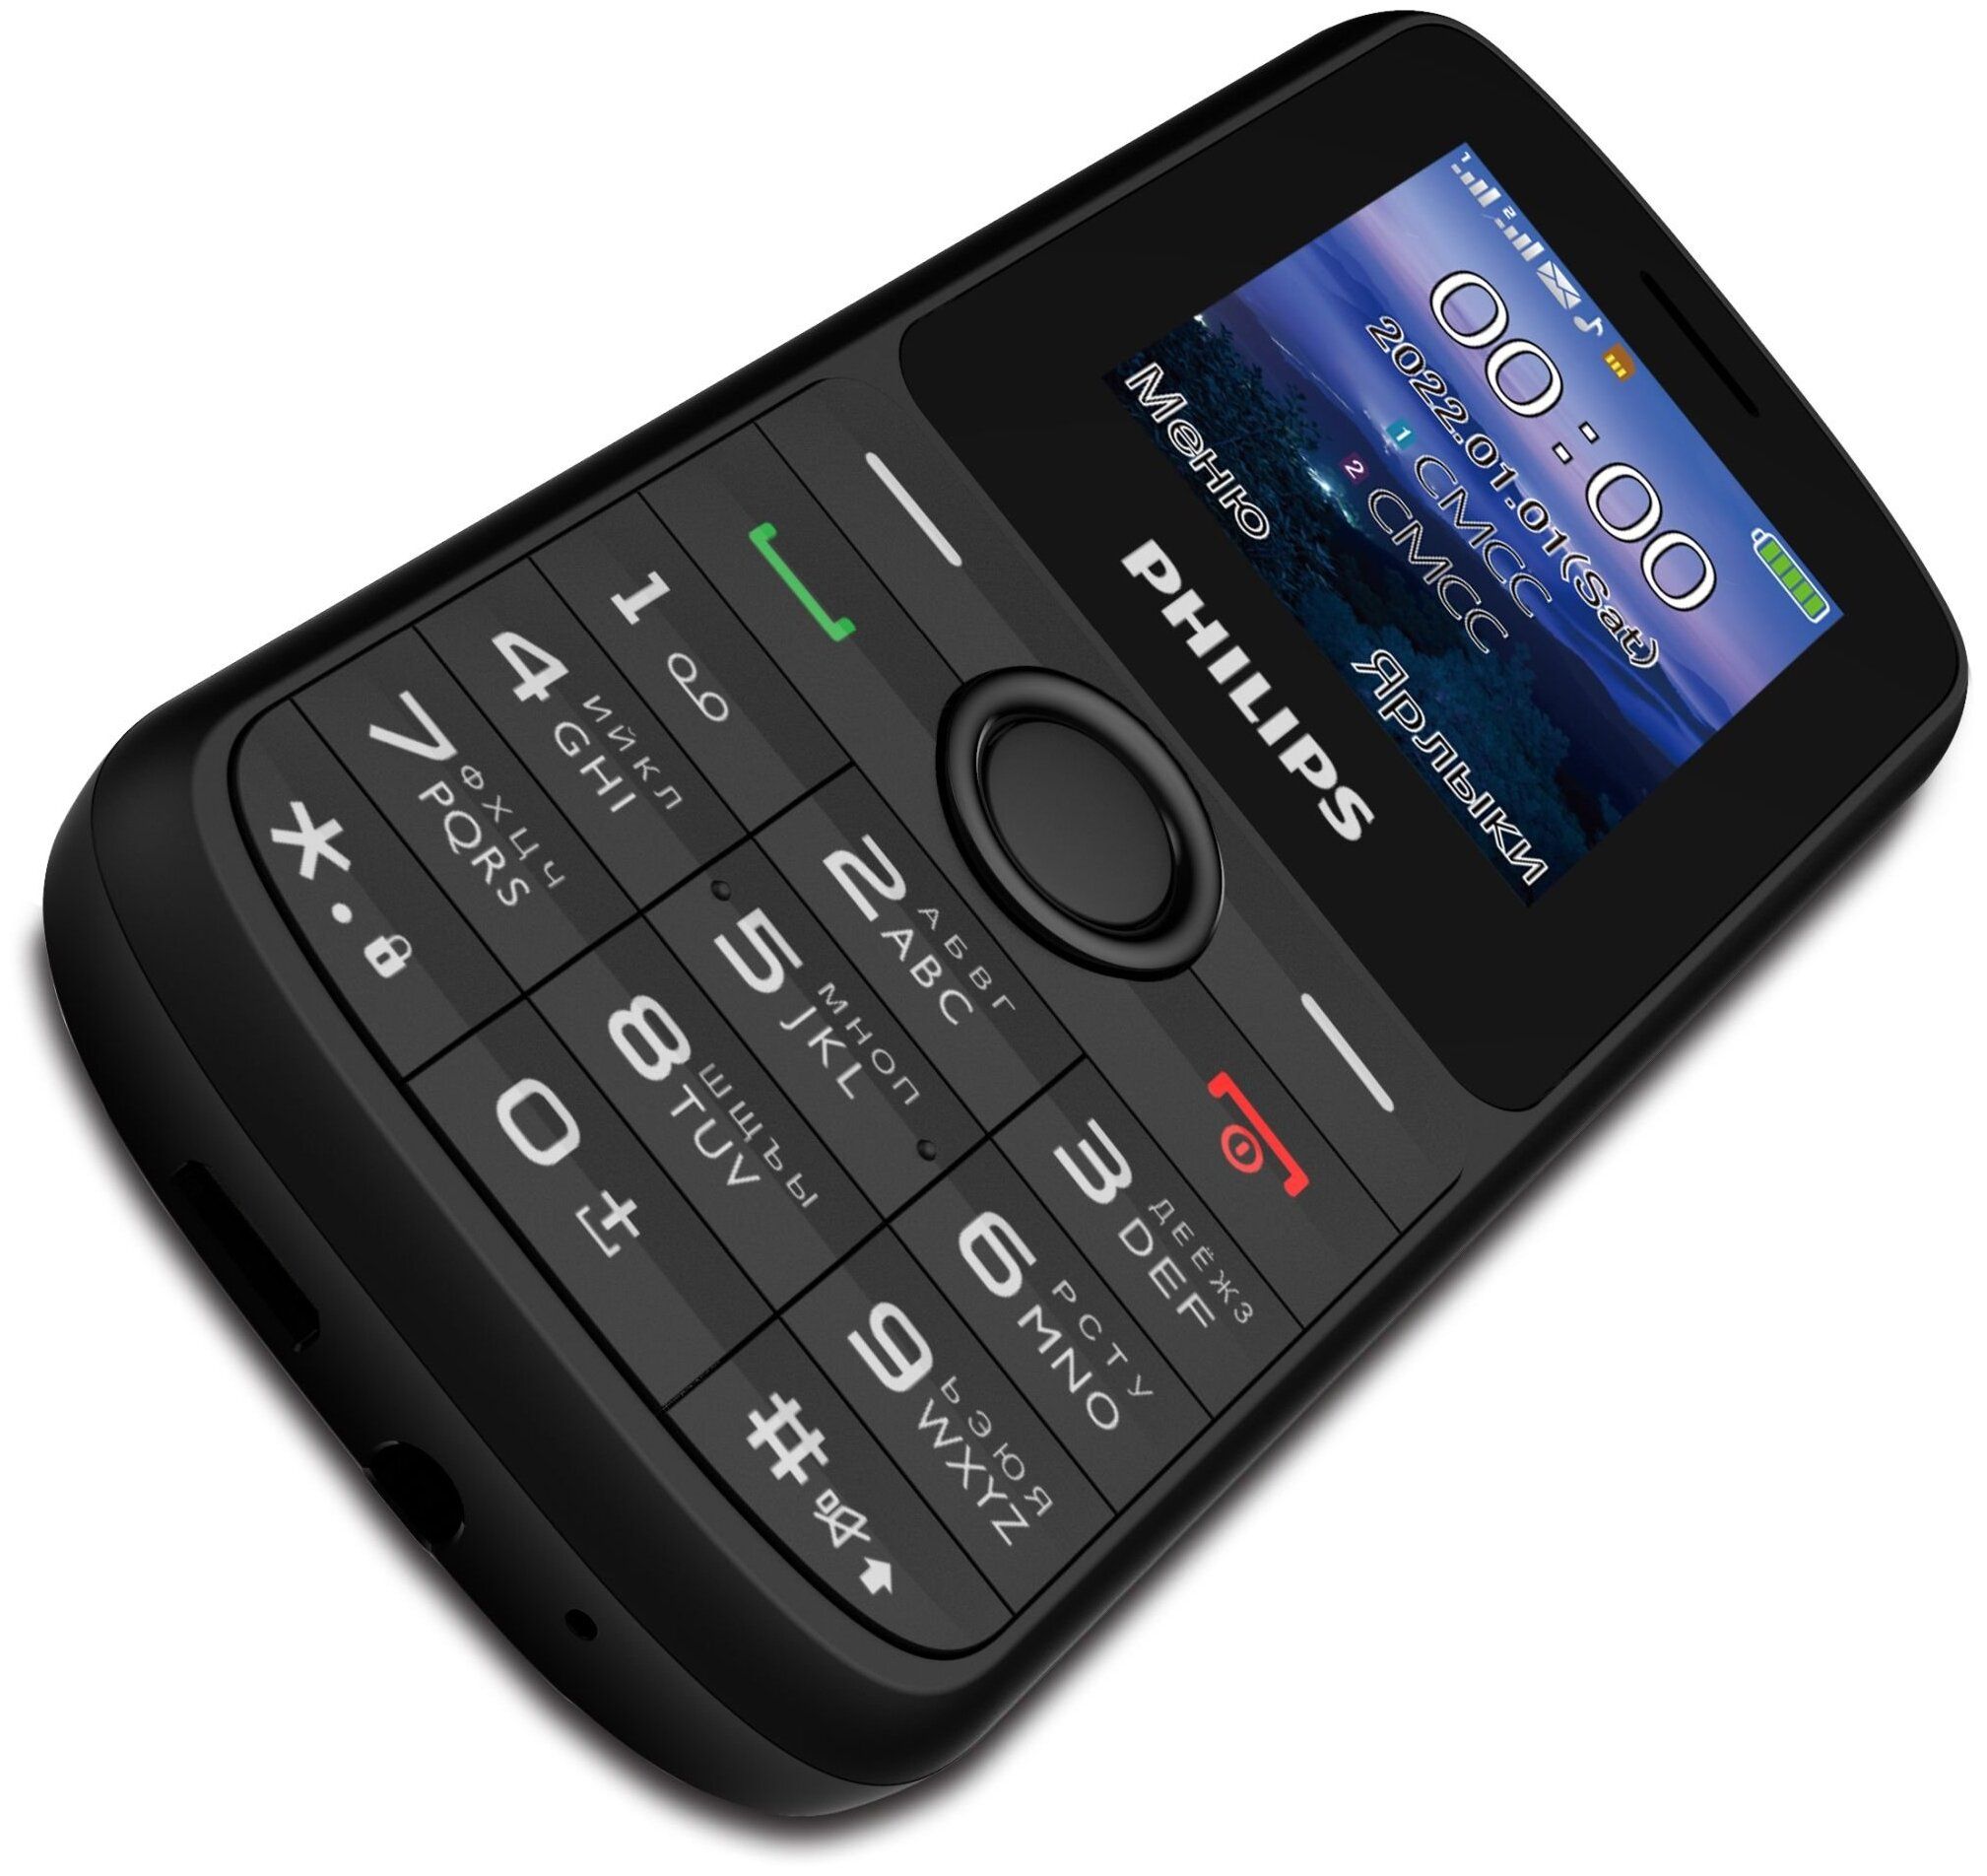 Philips xenium синий. Philips Xenium e2101. Мобильный телефон Philips Xenium e2101 черный. Philips Xenium e111. Philips Xenium e2101 Dual SIM черный.